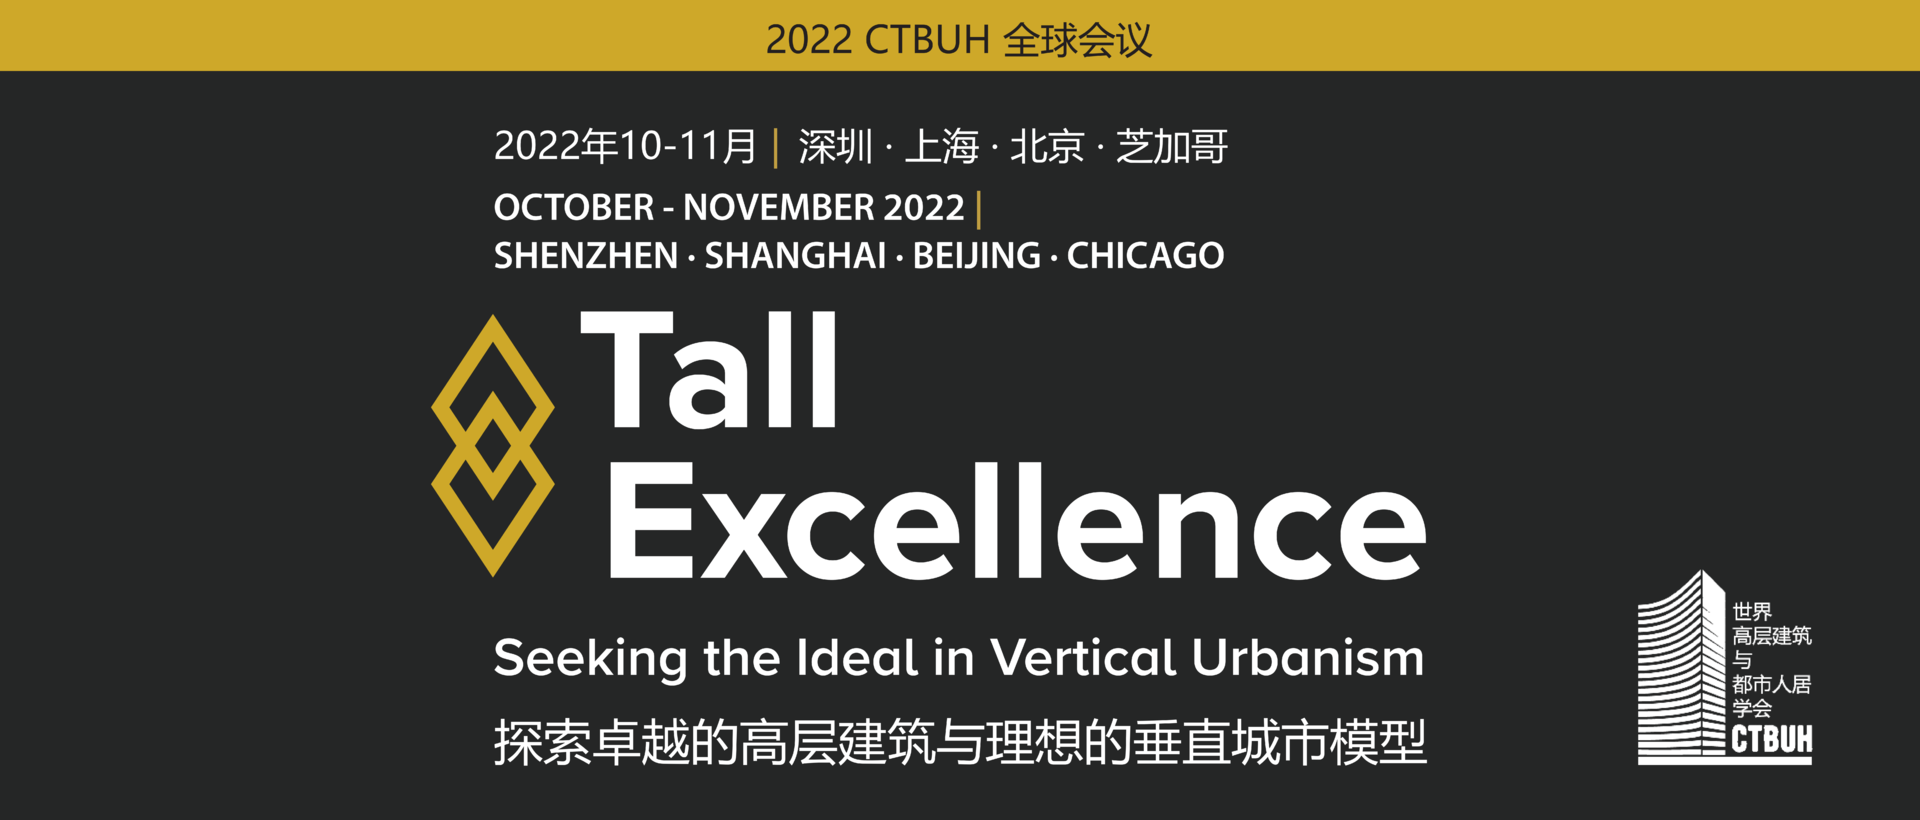 CTBUH2022中国区会议